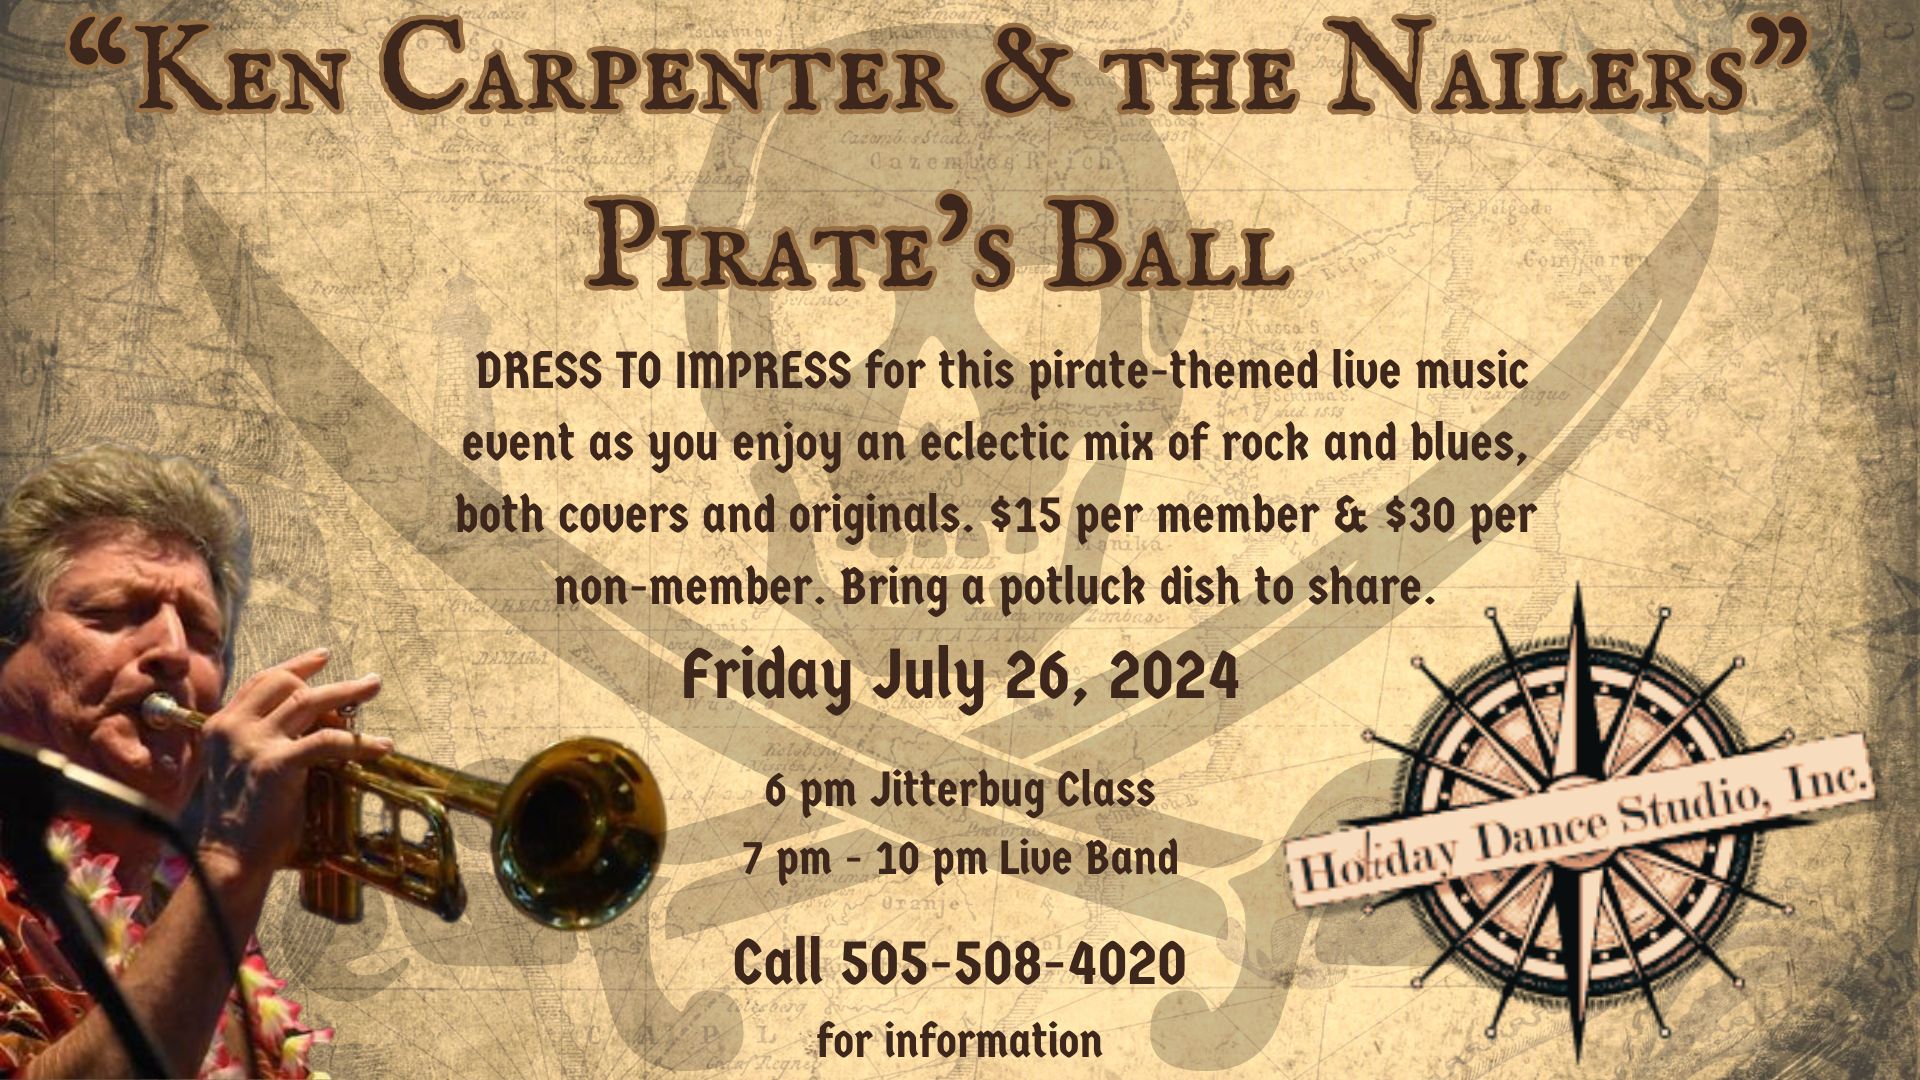 Ken Carpenter & the Nailers Pirate’s Ball